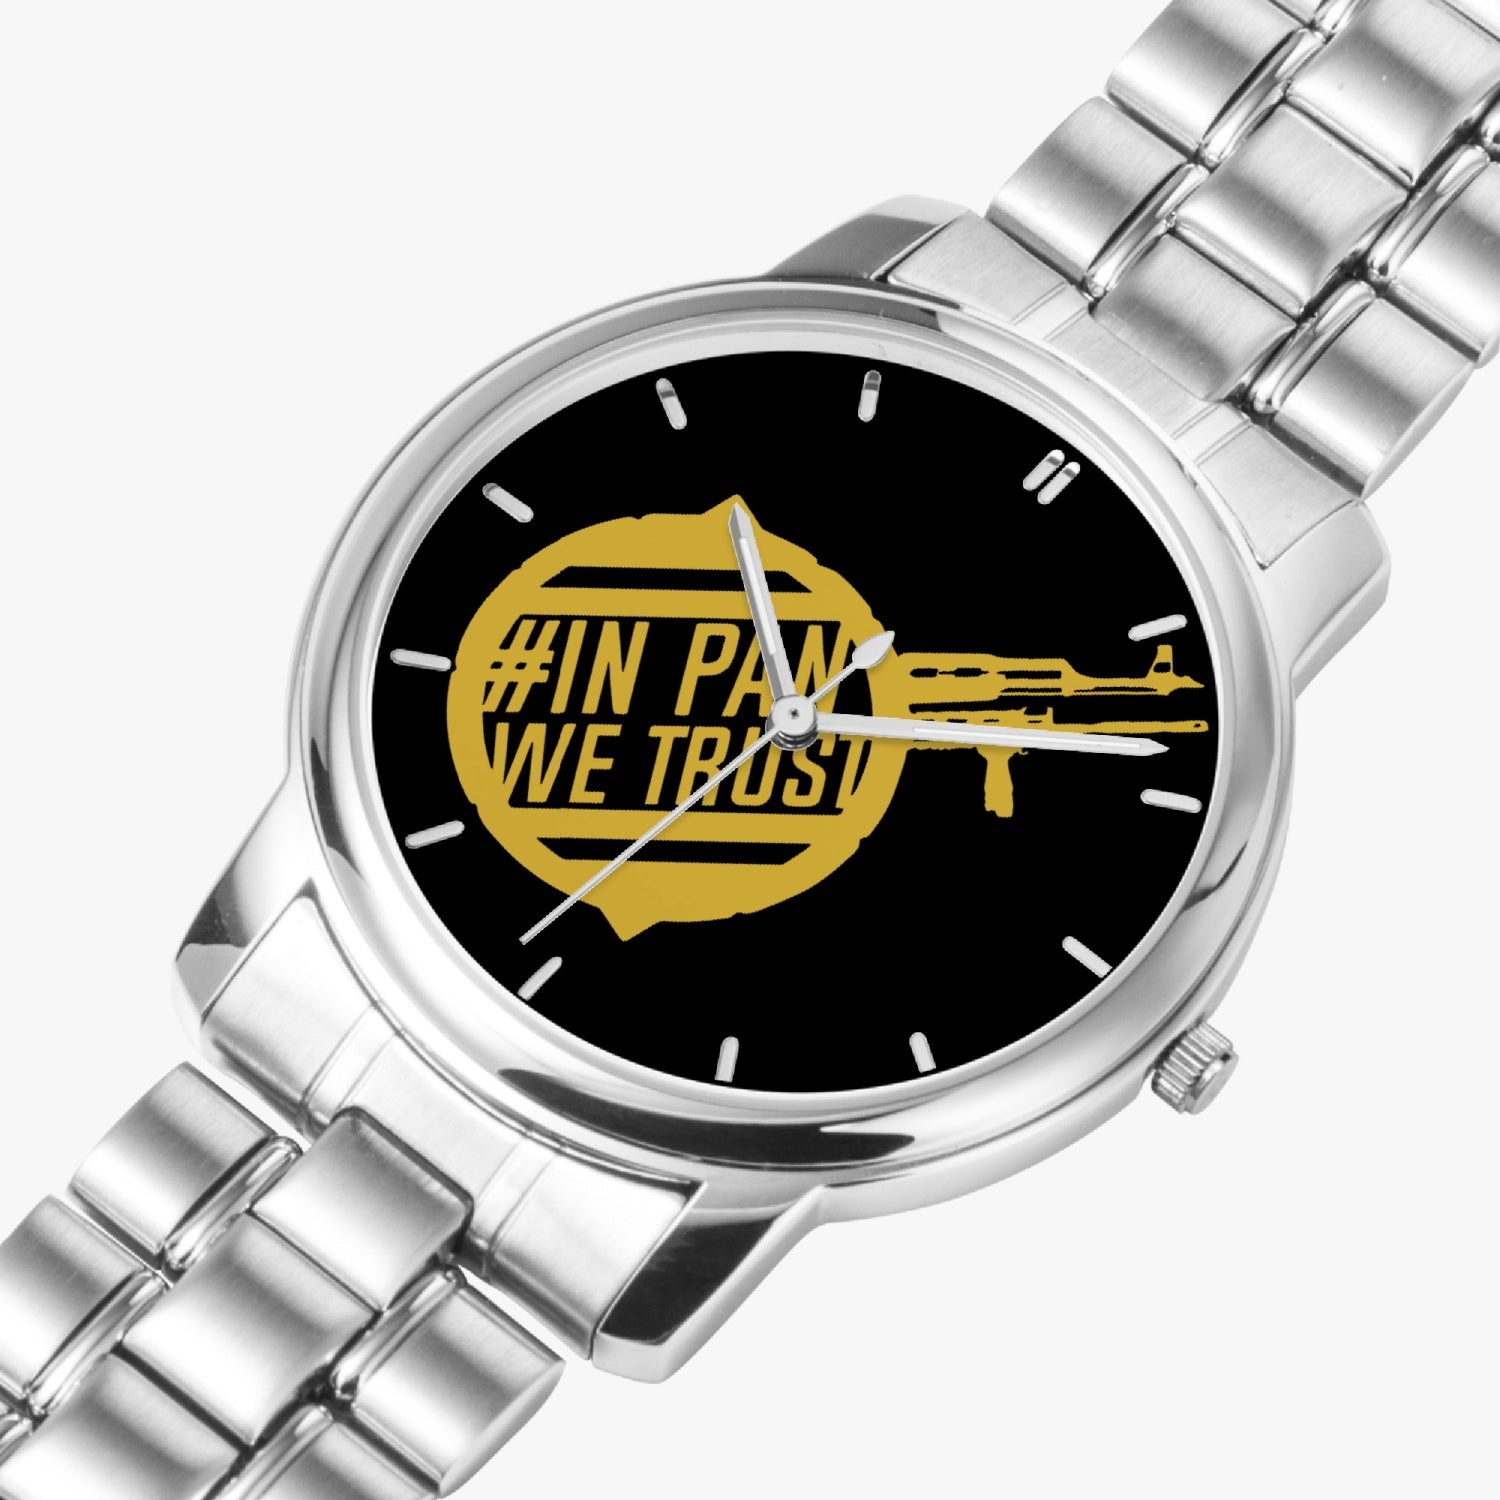 inpan Stainless Steel Quartz Watch